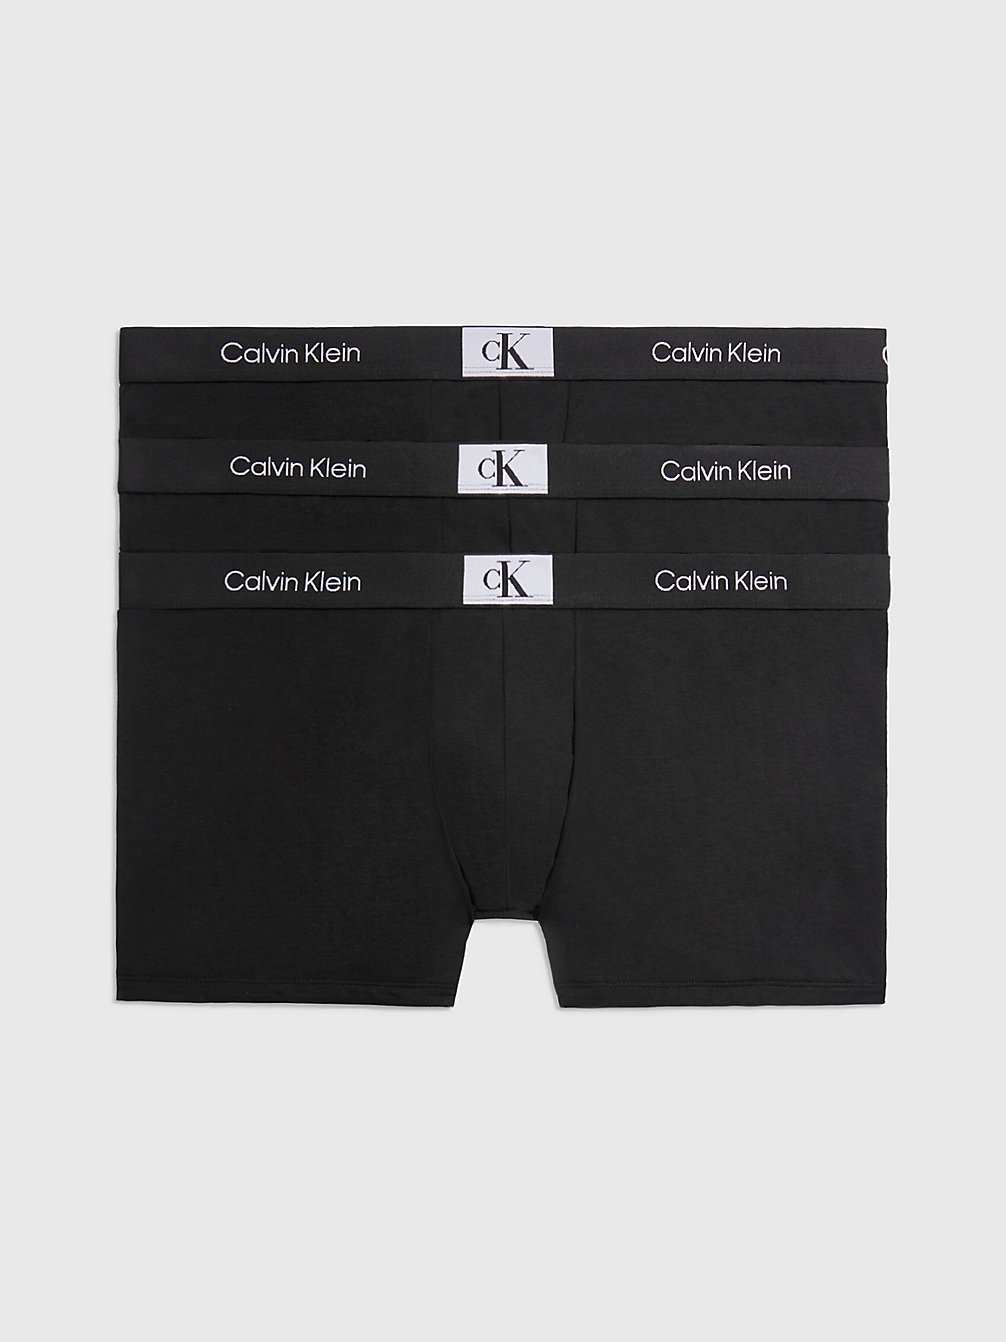 BLACK/BLACK/BLACK 3-Er Pack Trunks In Übergröße - Ck96 undefined Herren Calvin Klein